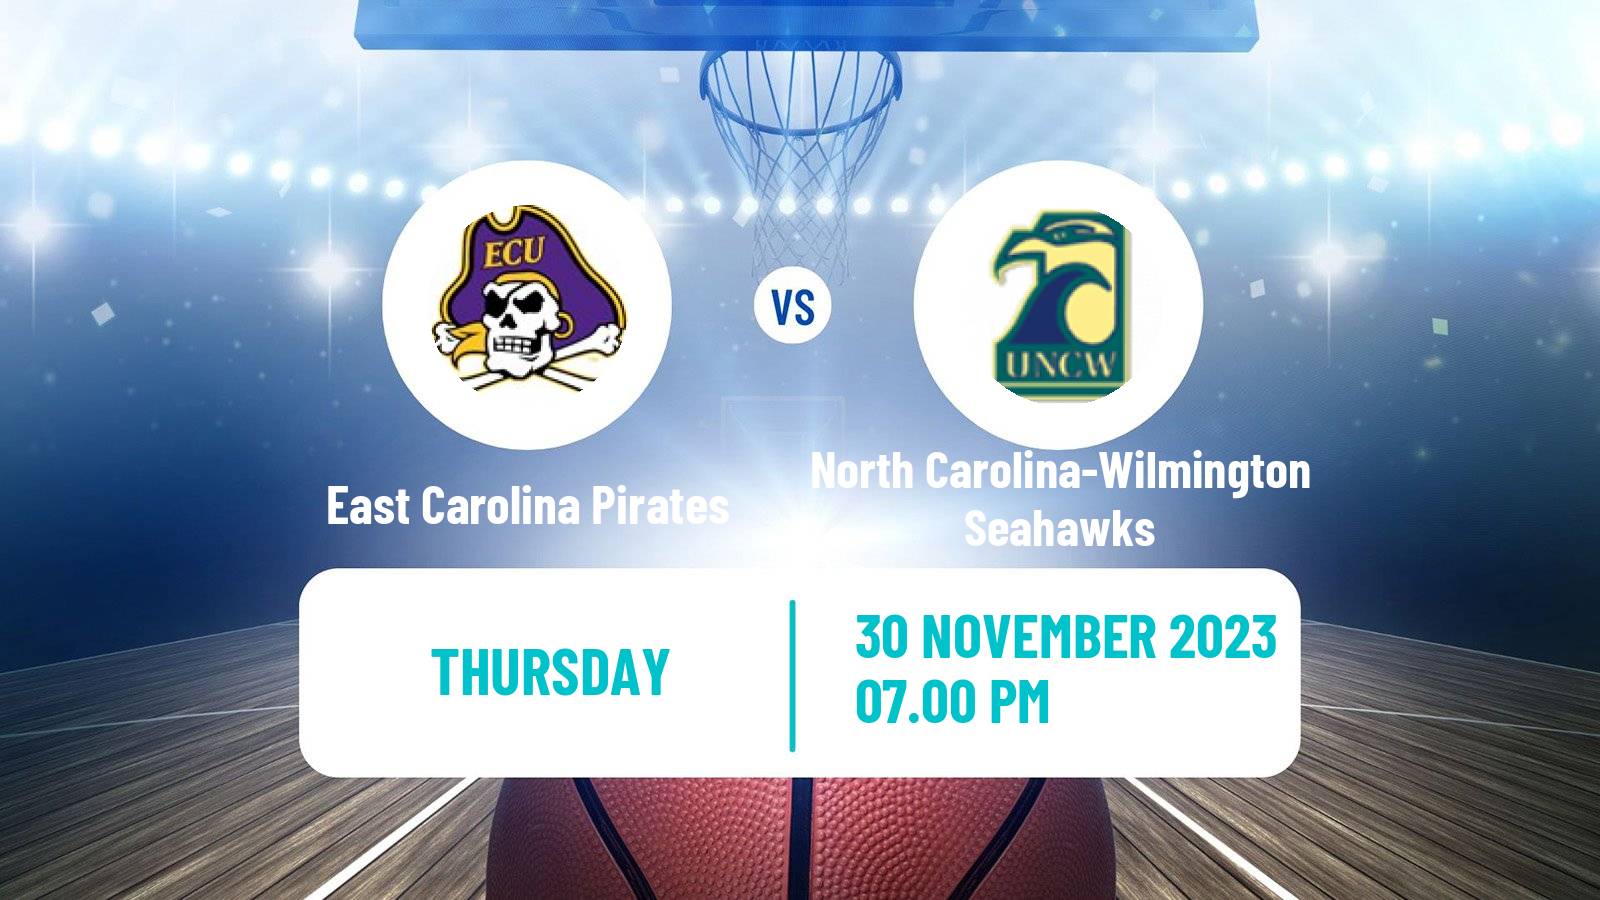 Basketball NCAA College Basketball East Carolina Pirates - North Carolina-Wilmington Seahawks